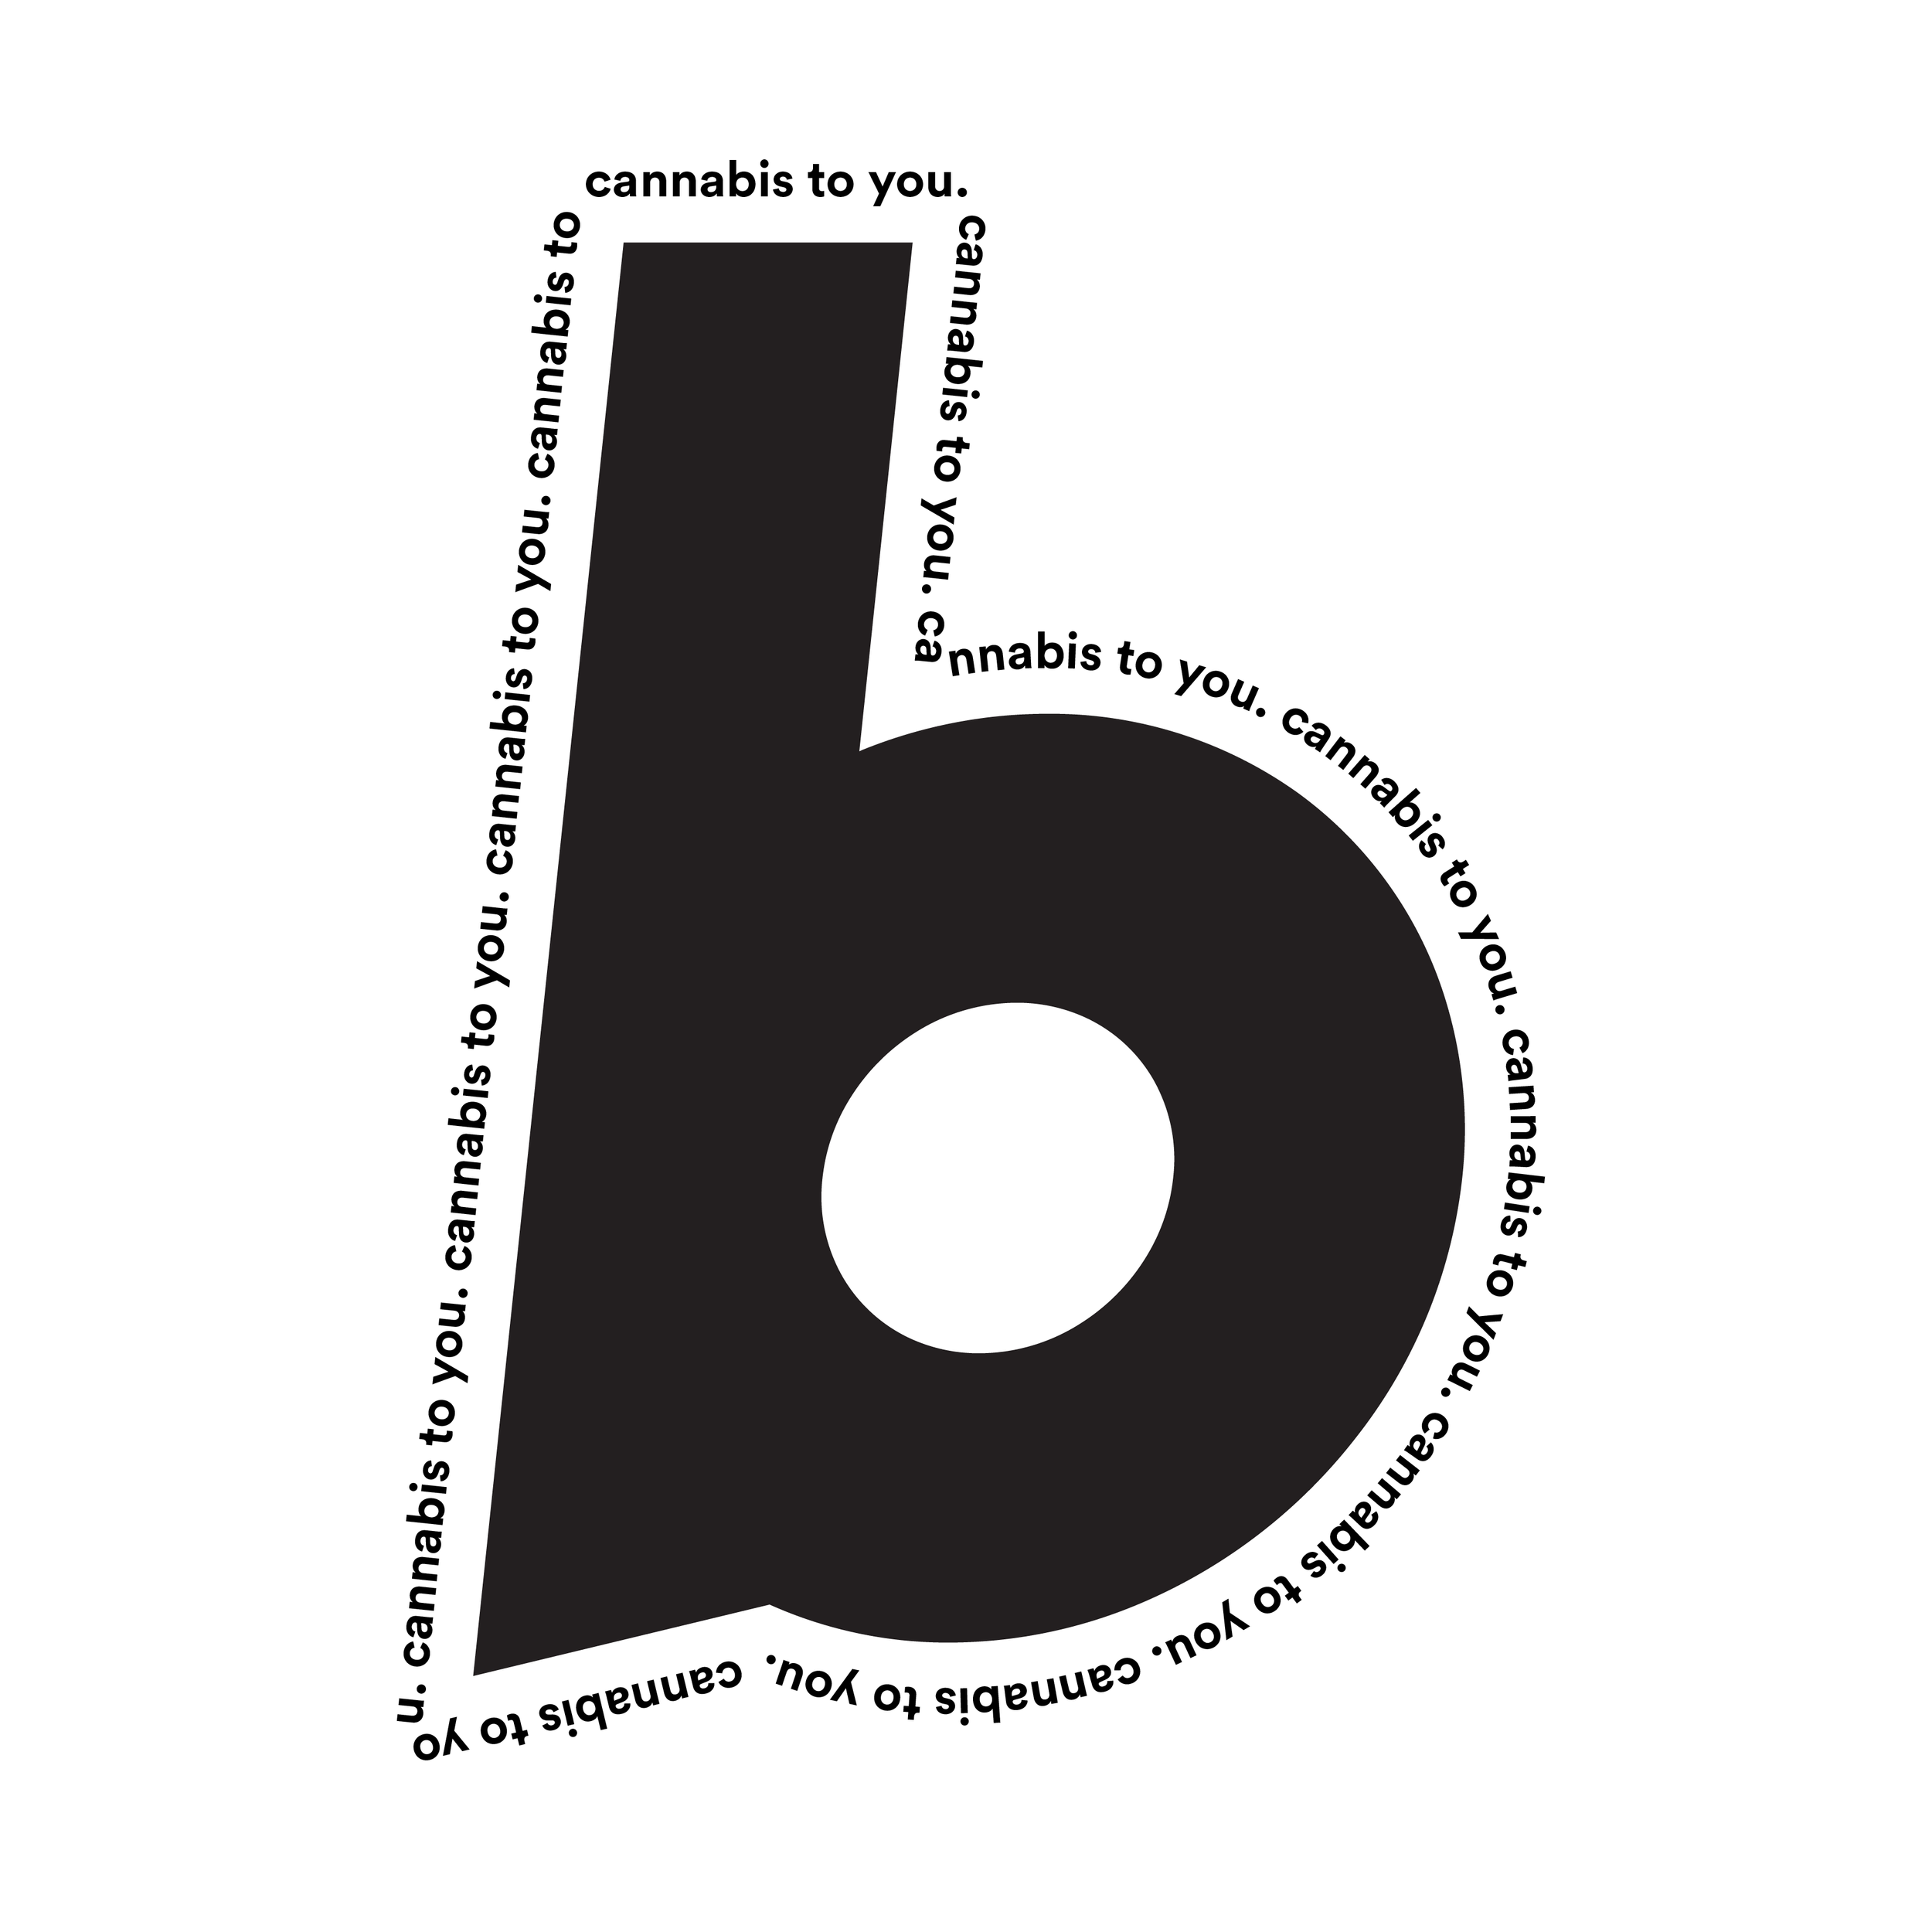 b logo cannabis to you-01.png